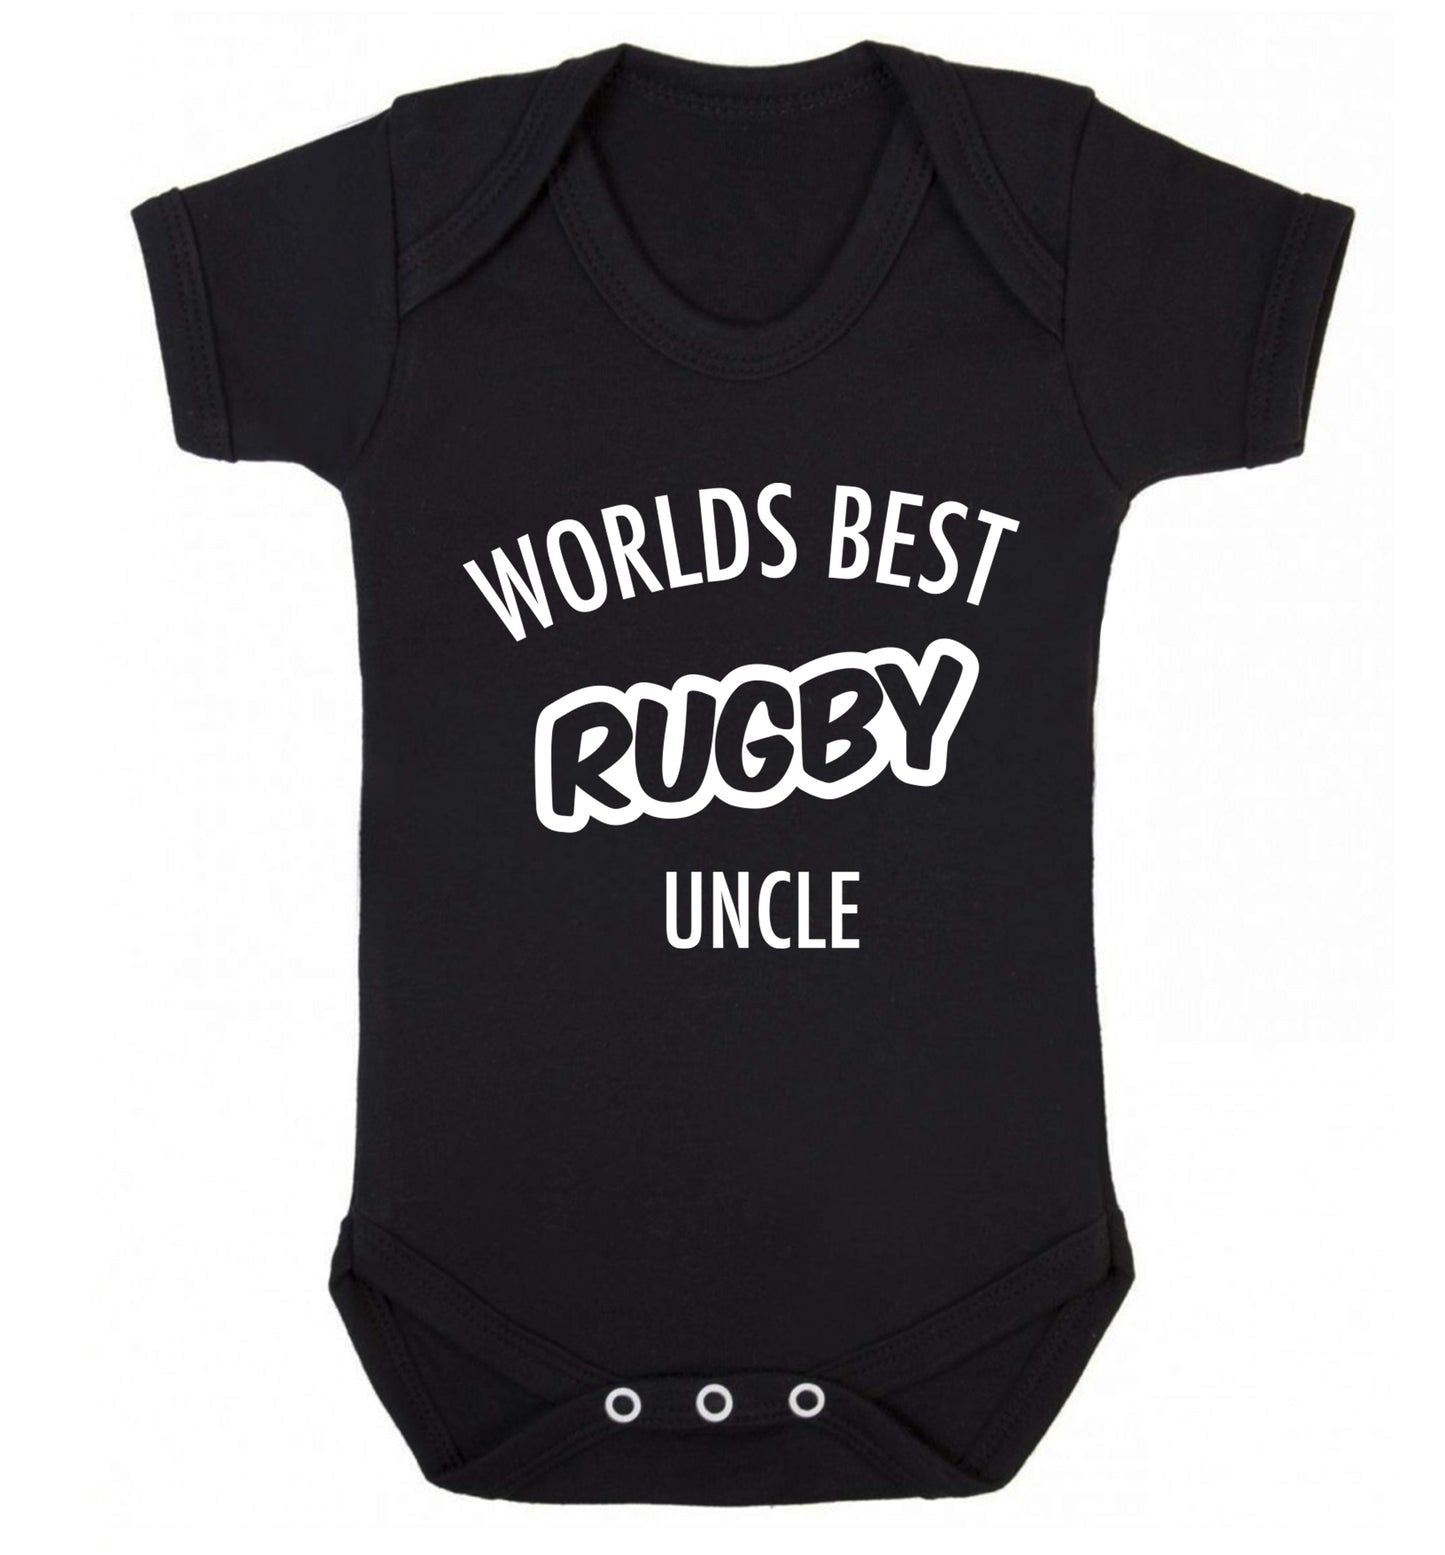 Worlds best rugby uncle Baby Vest black 18-24 months